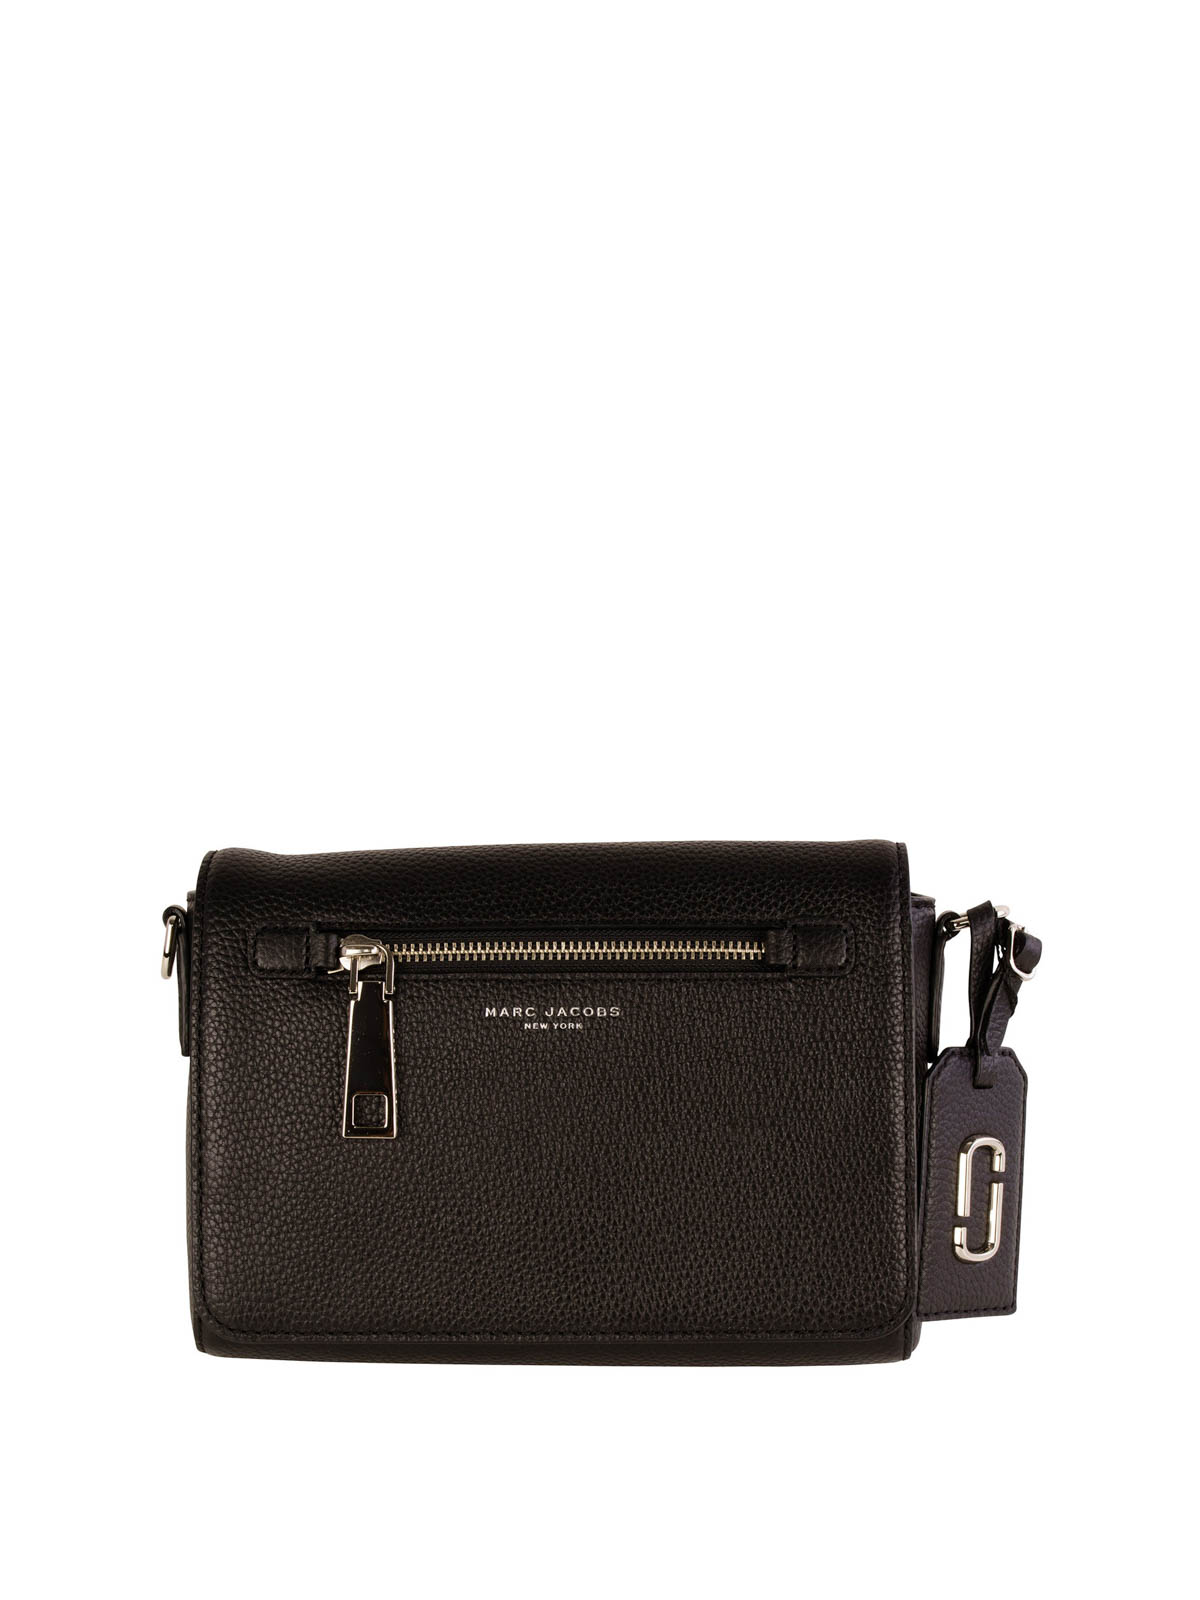 Marc Jacobs New York Crossbody Purse Handbag Black Leather Small Gold  Hardware